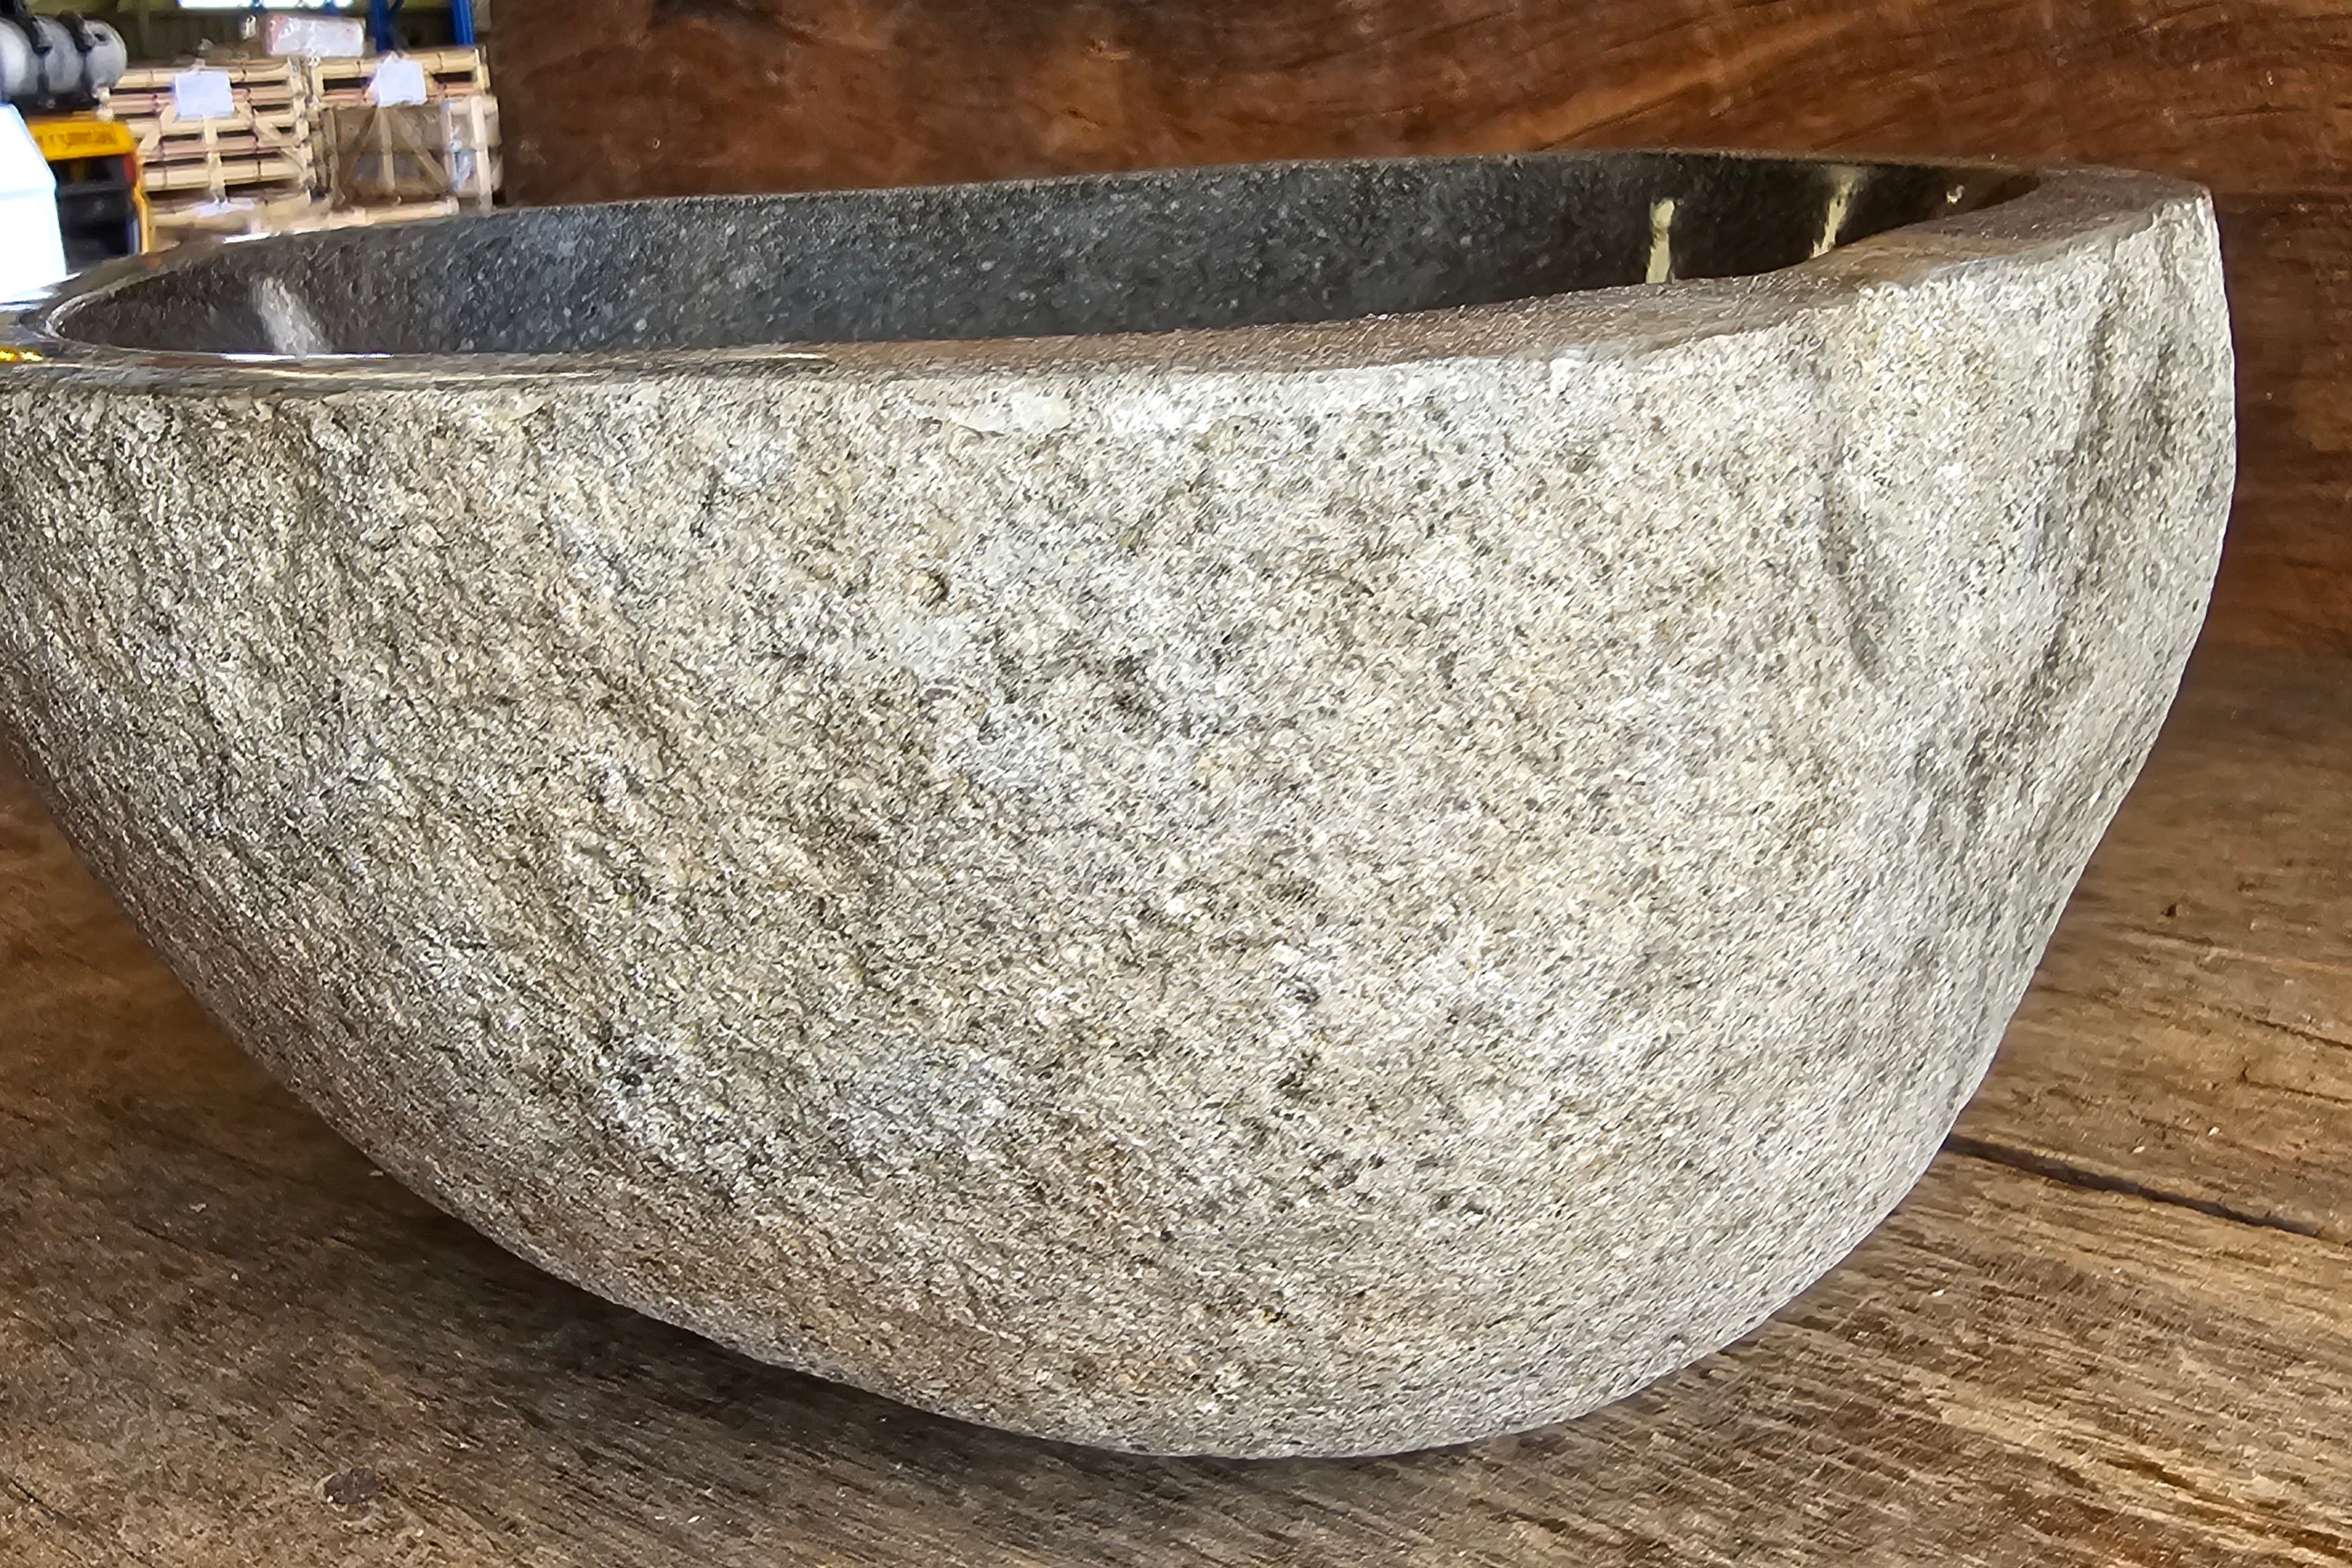 Handmade Natural Oval River Stone Bathroom Basin - RXS 230619